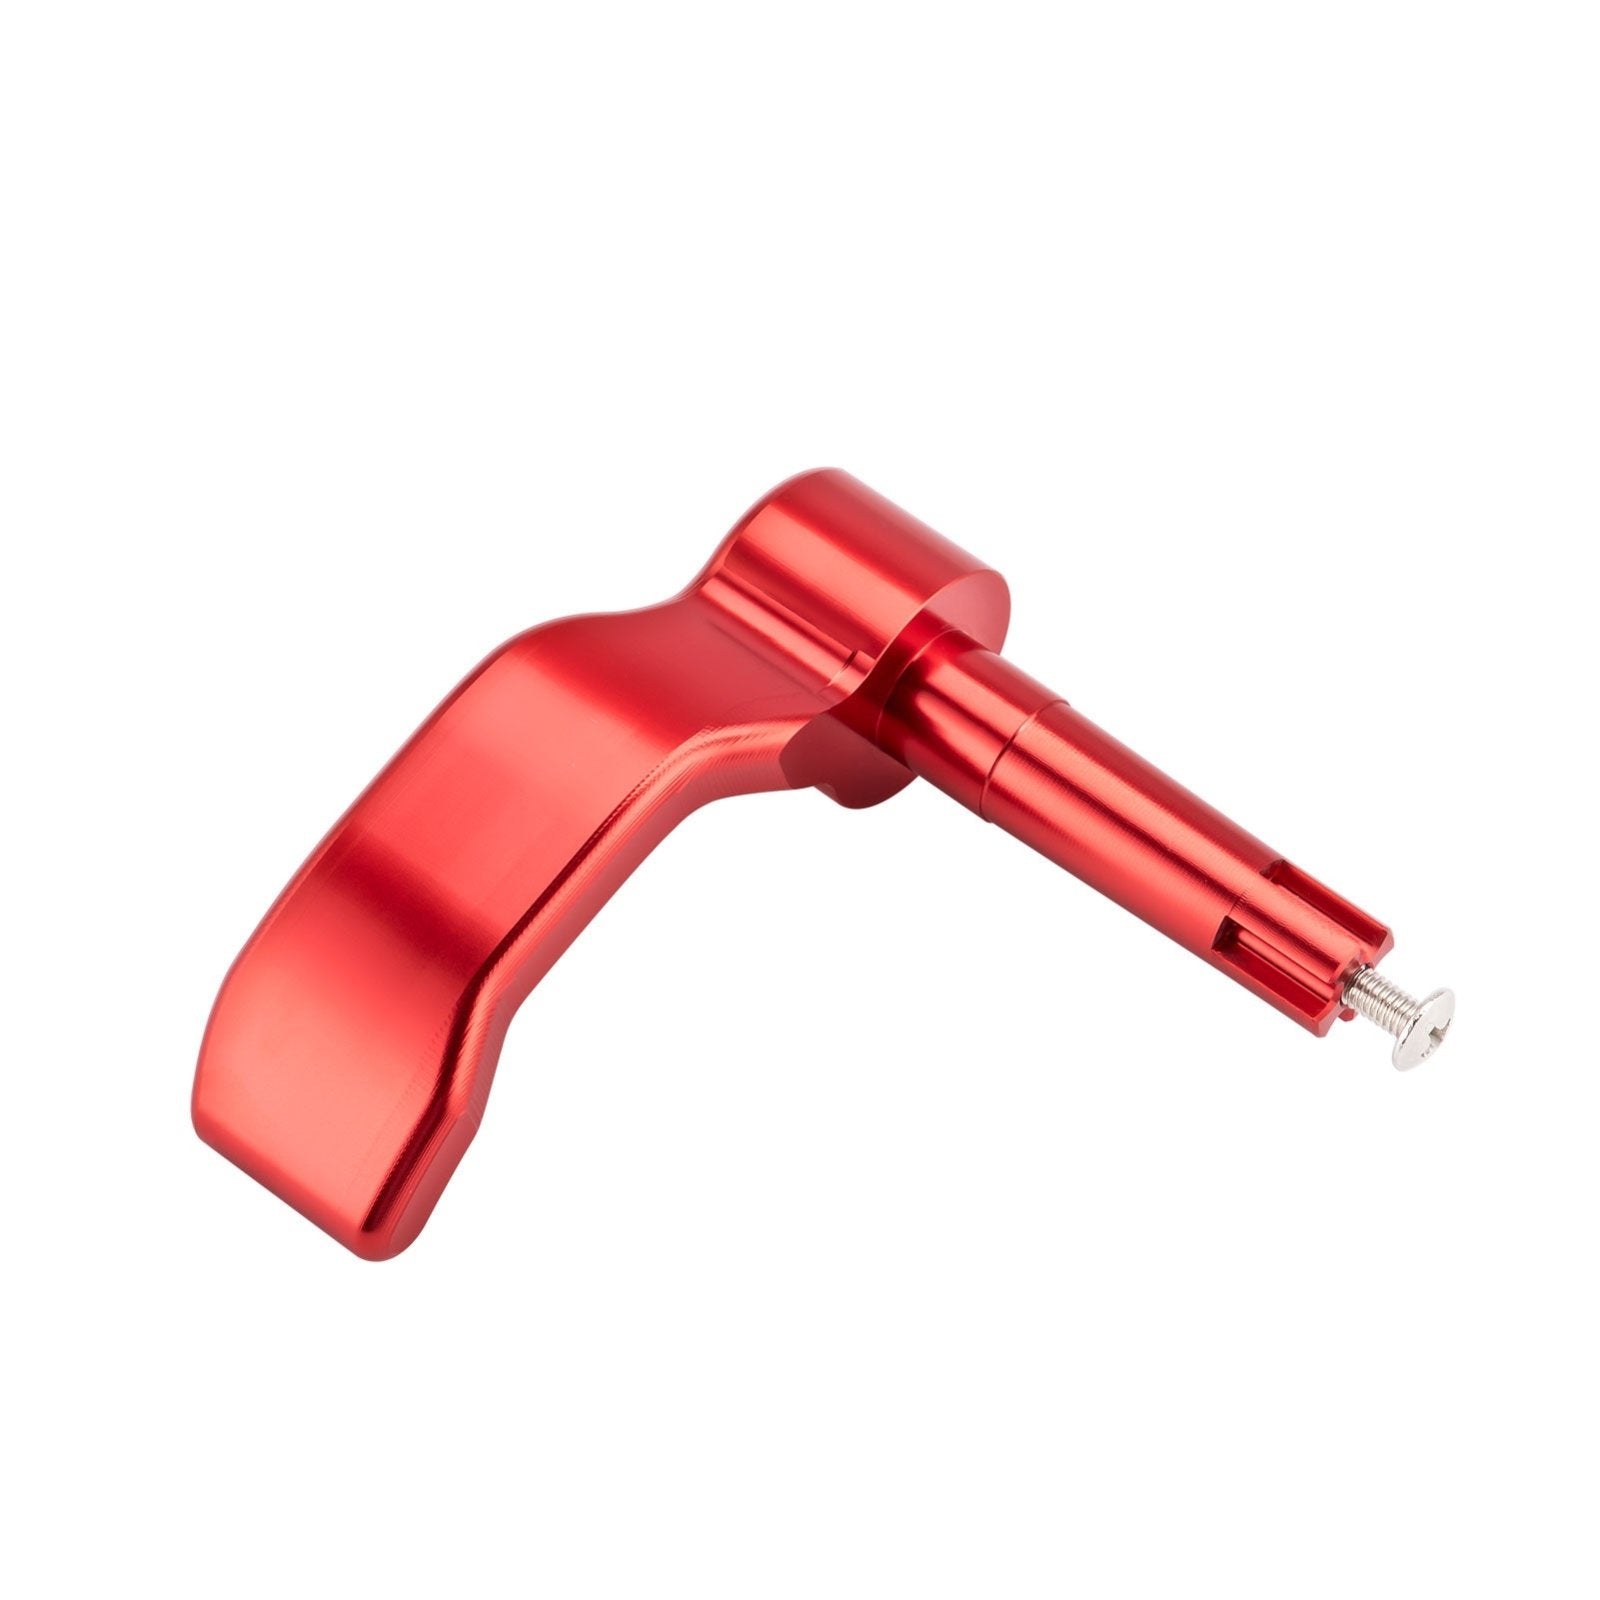 Polaris Sportsman/Scrambler Red Aluminum Thumb Throttle Control Lever - Weisen